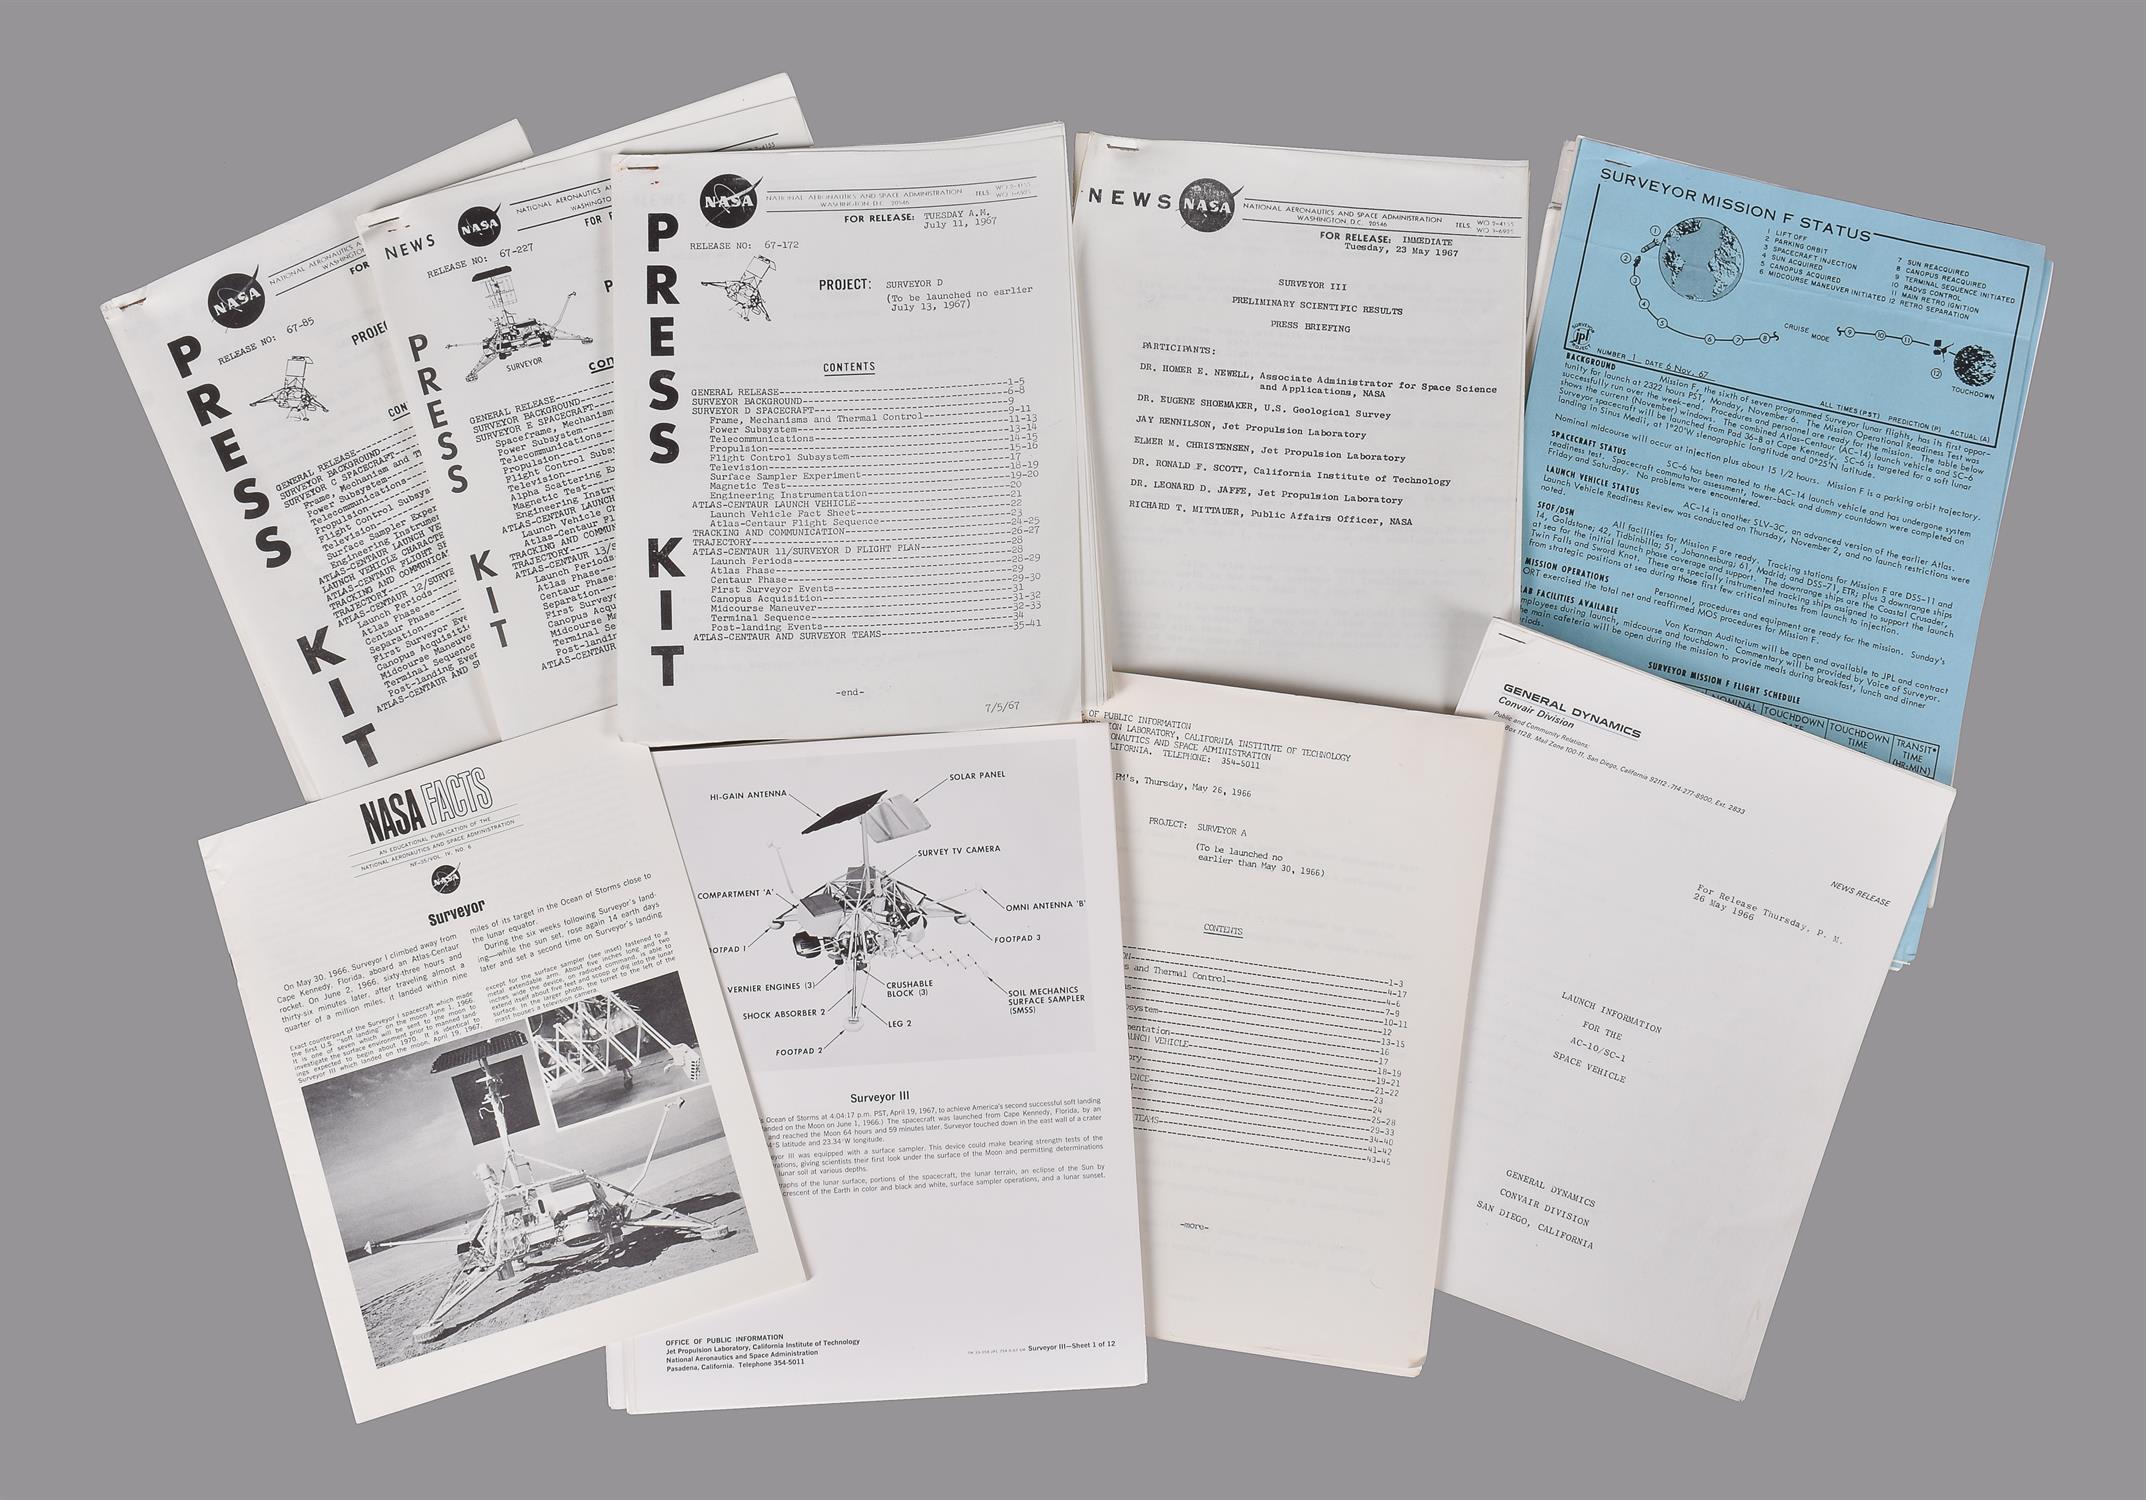 Surveyor. 0fficial NASA press kits and associated printed material.